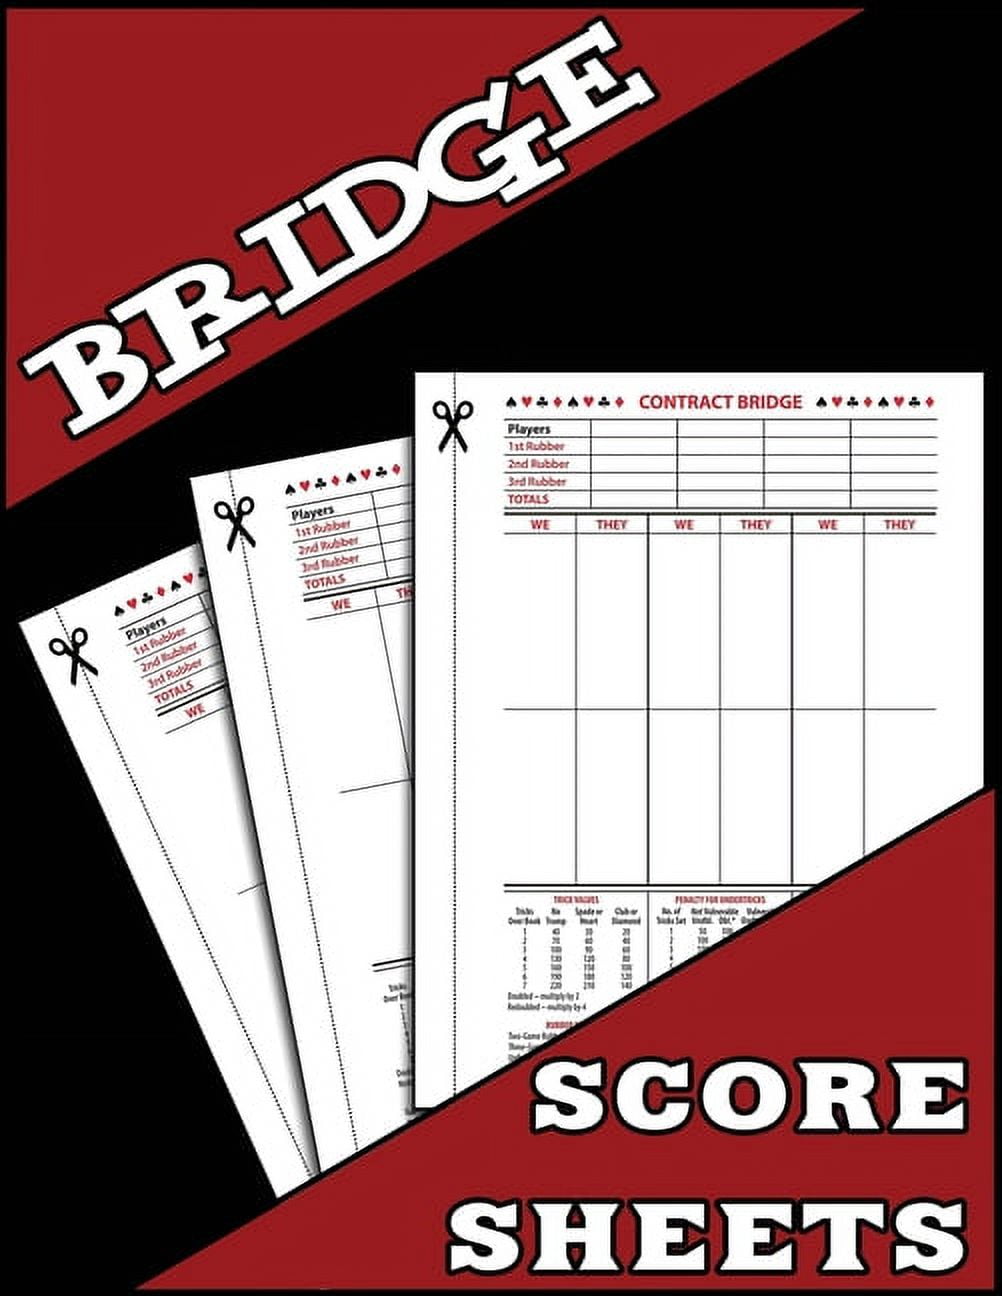 Bridge Score Sheets Contract Bridge Large Size Bridge Game Score